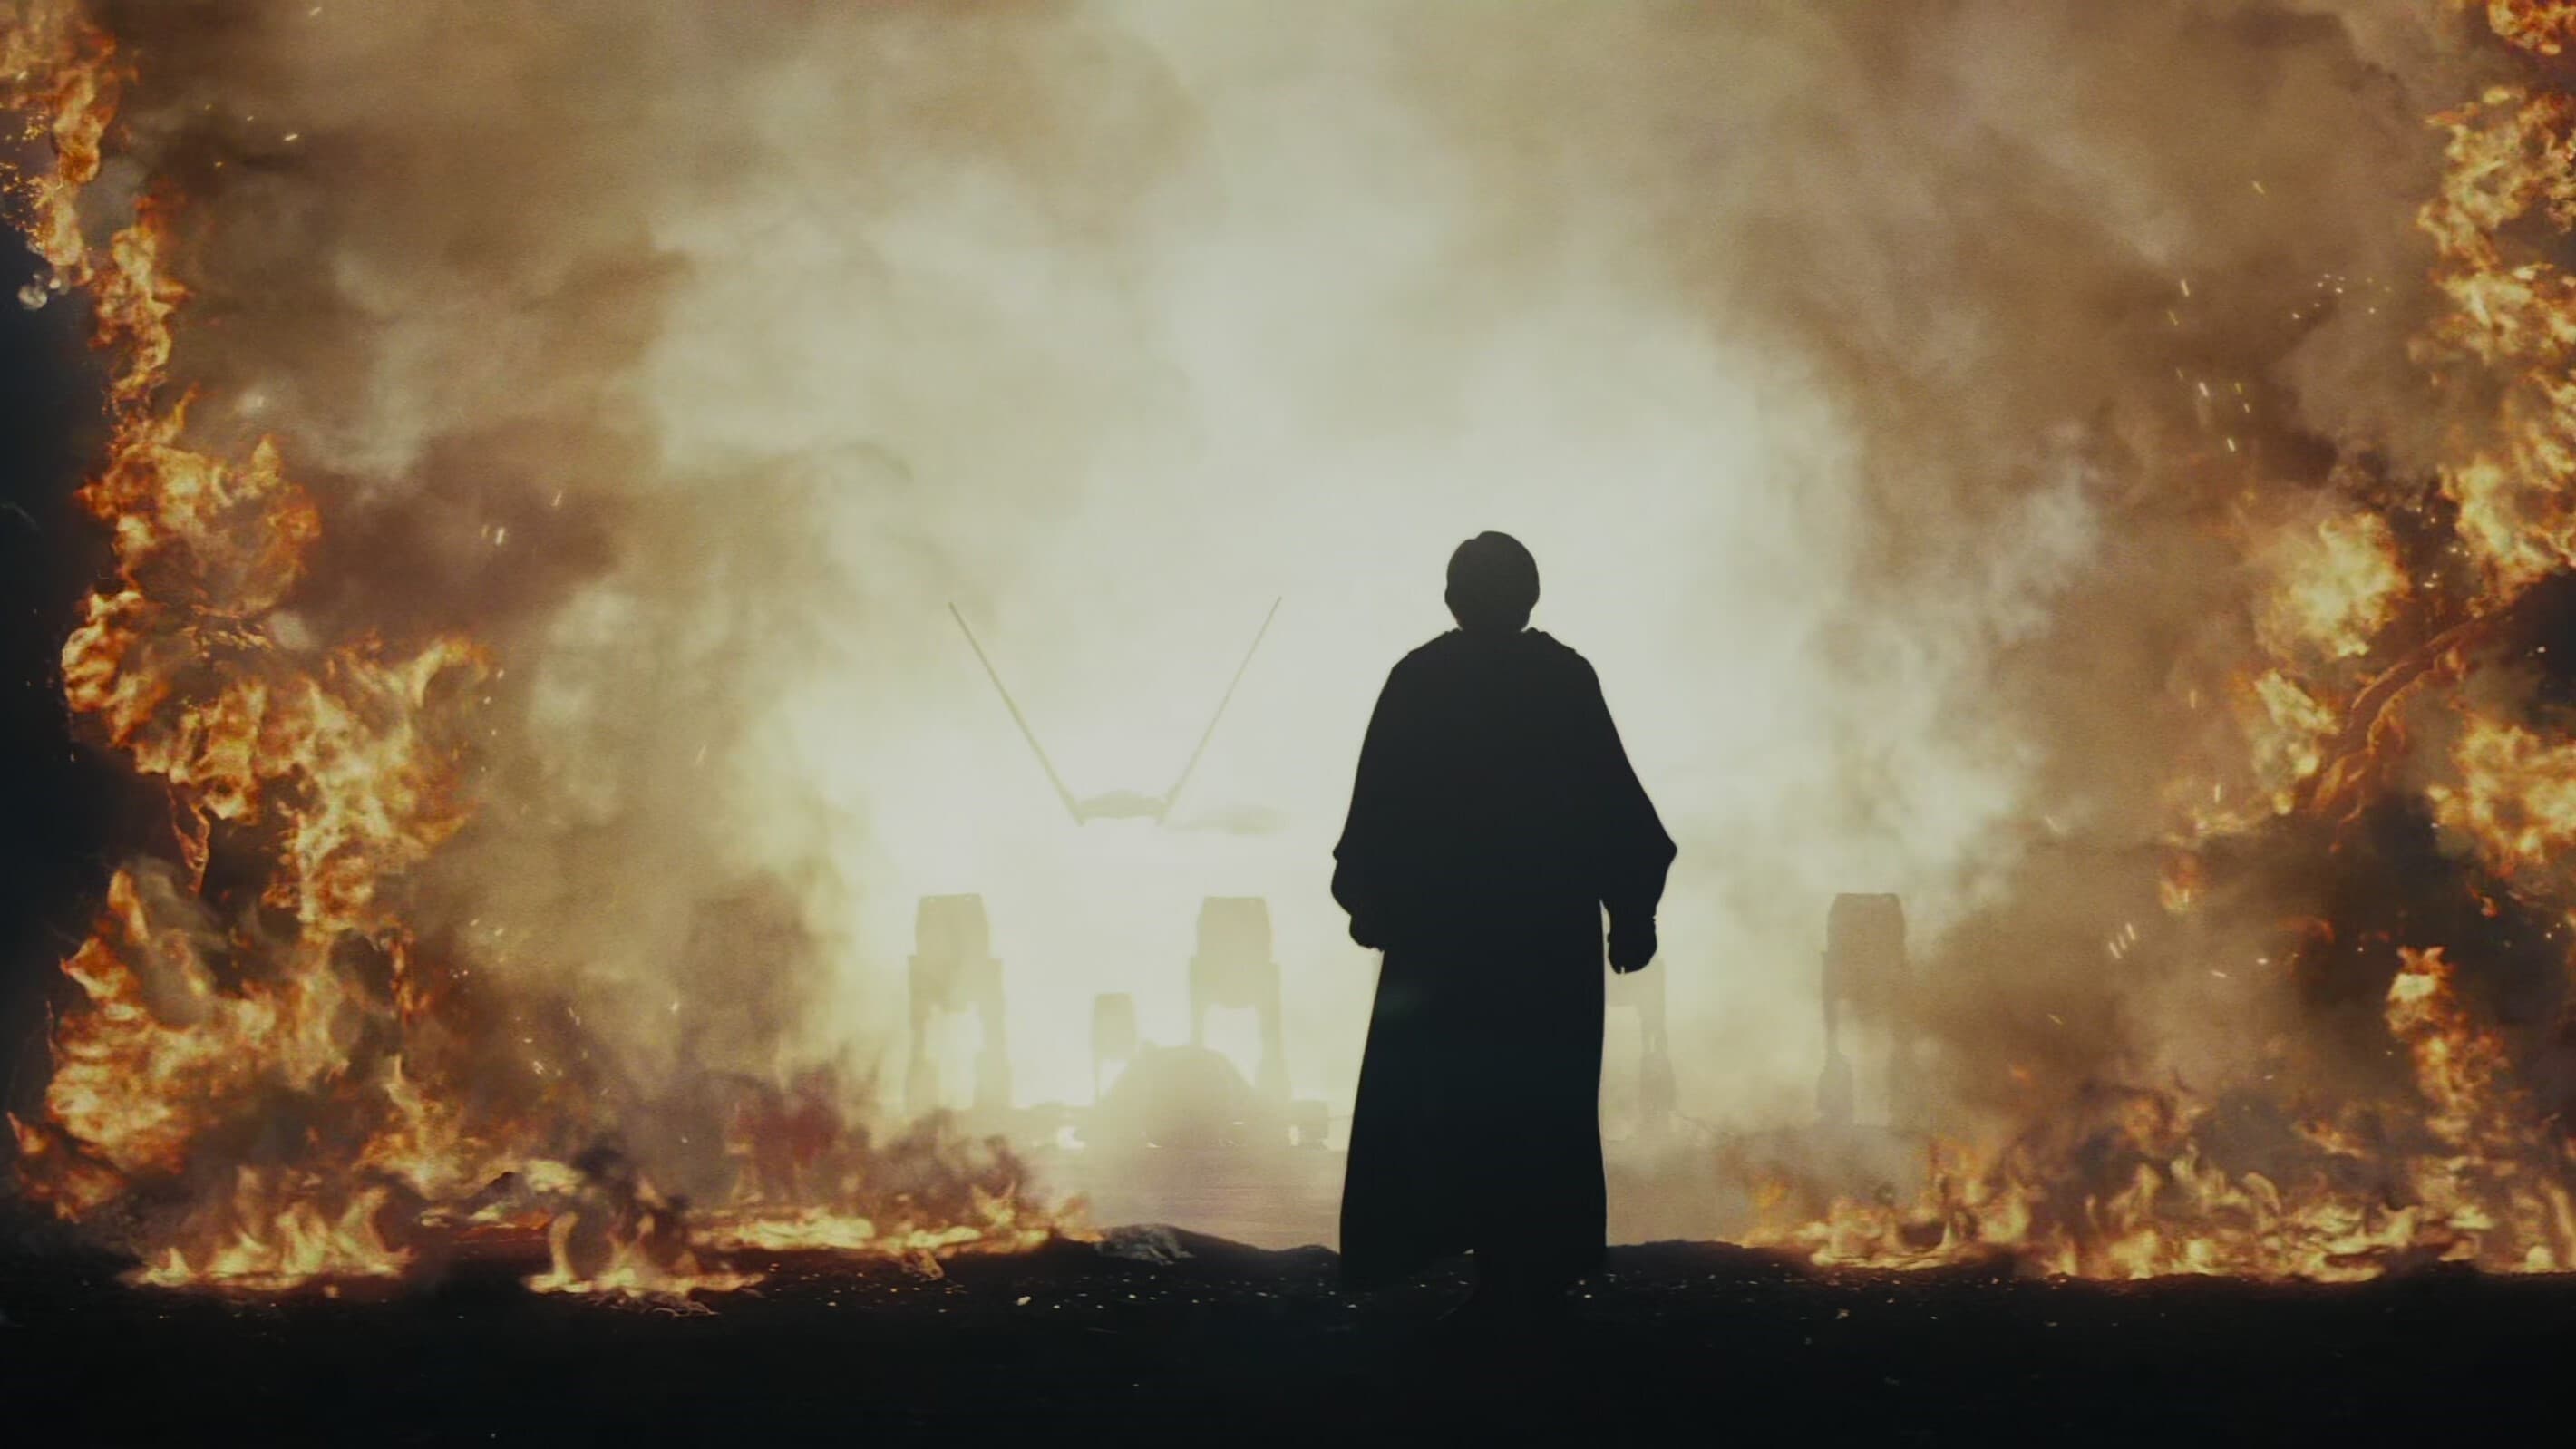 Image du film Star Wars Episode VIII : les derniers Jedi mleimgd5ecphhvoxhghjx96omskjpg